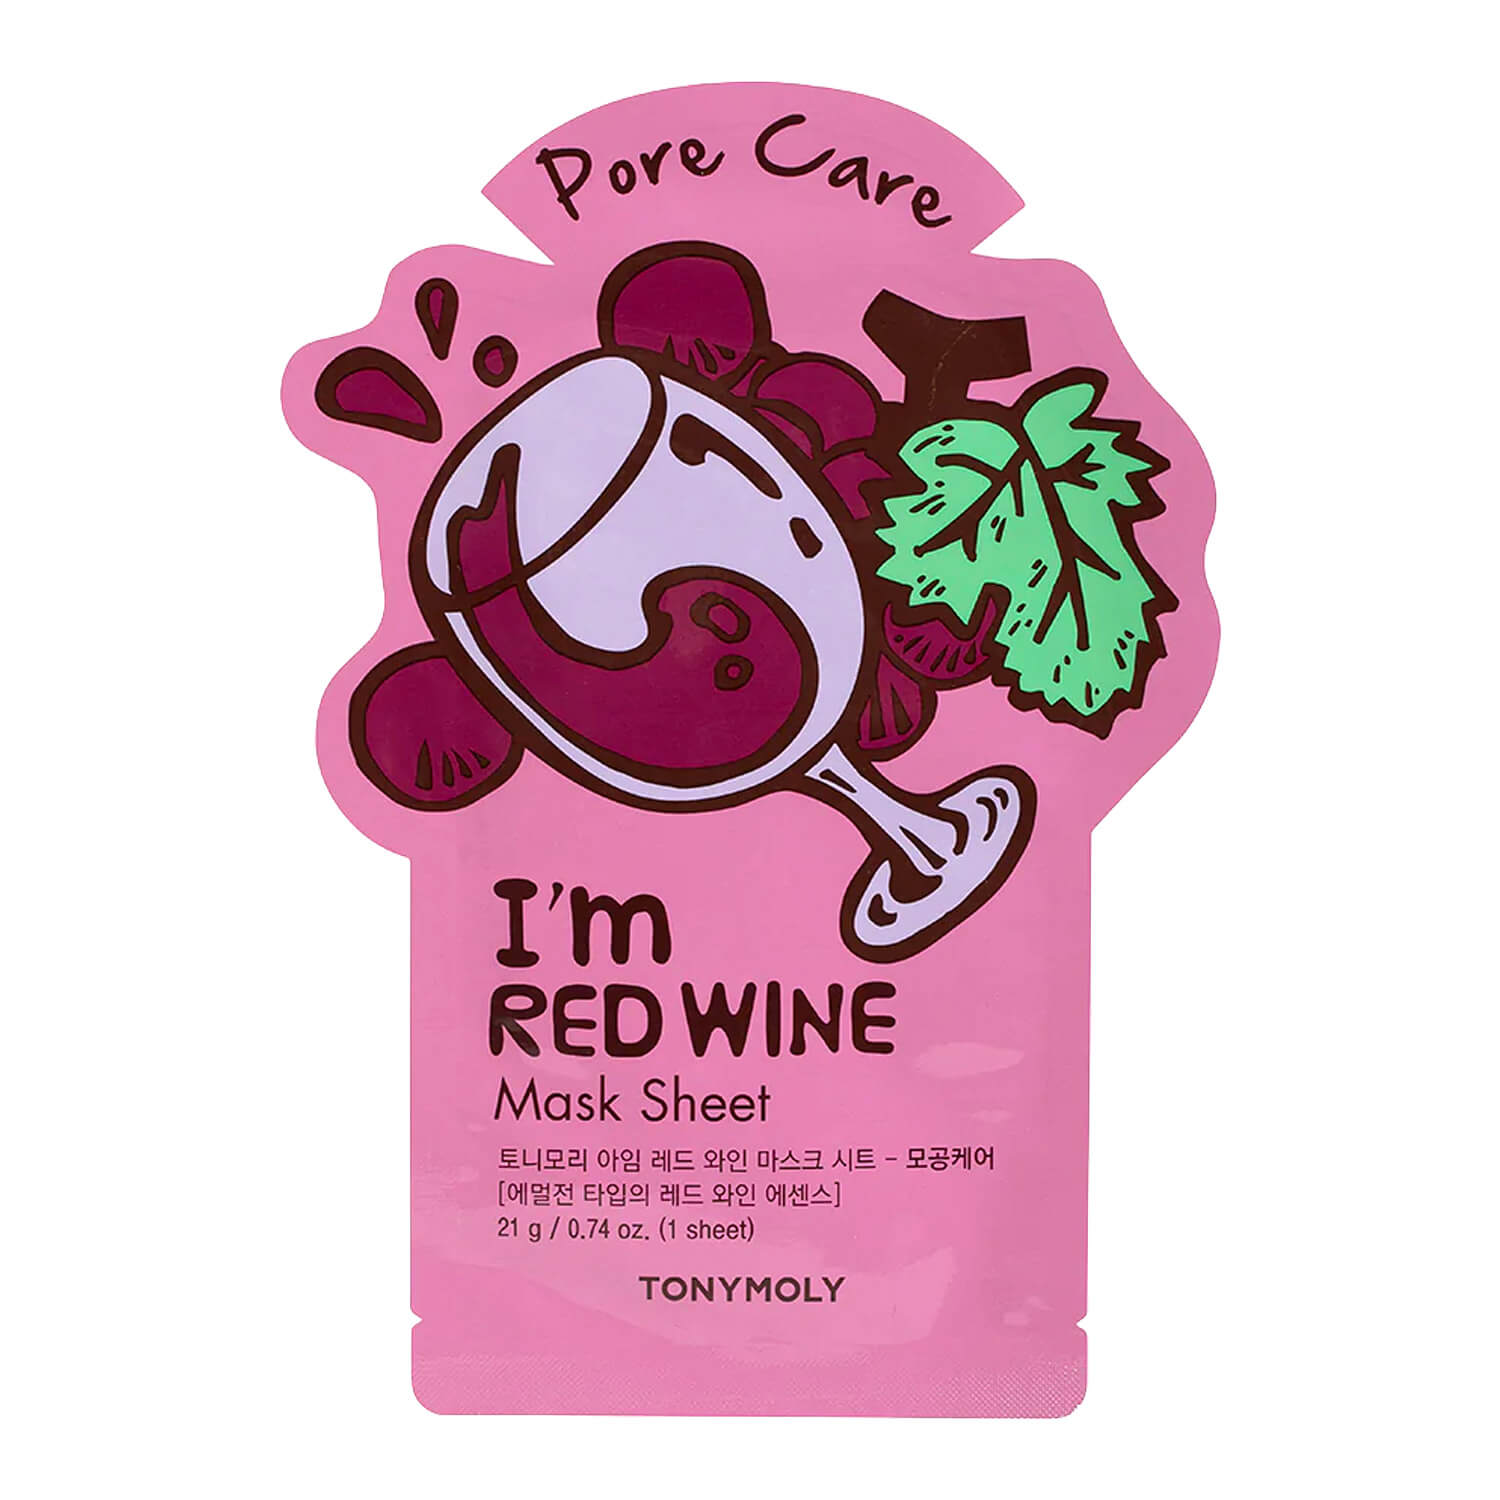 i am real red wine mask sheet-pore care (mascarilla facial para poros)